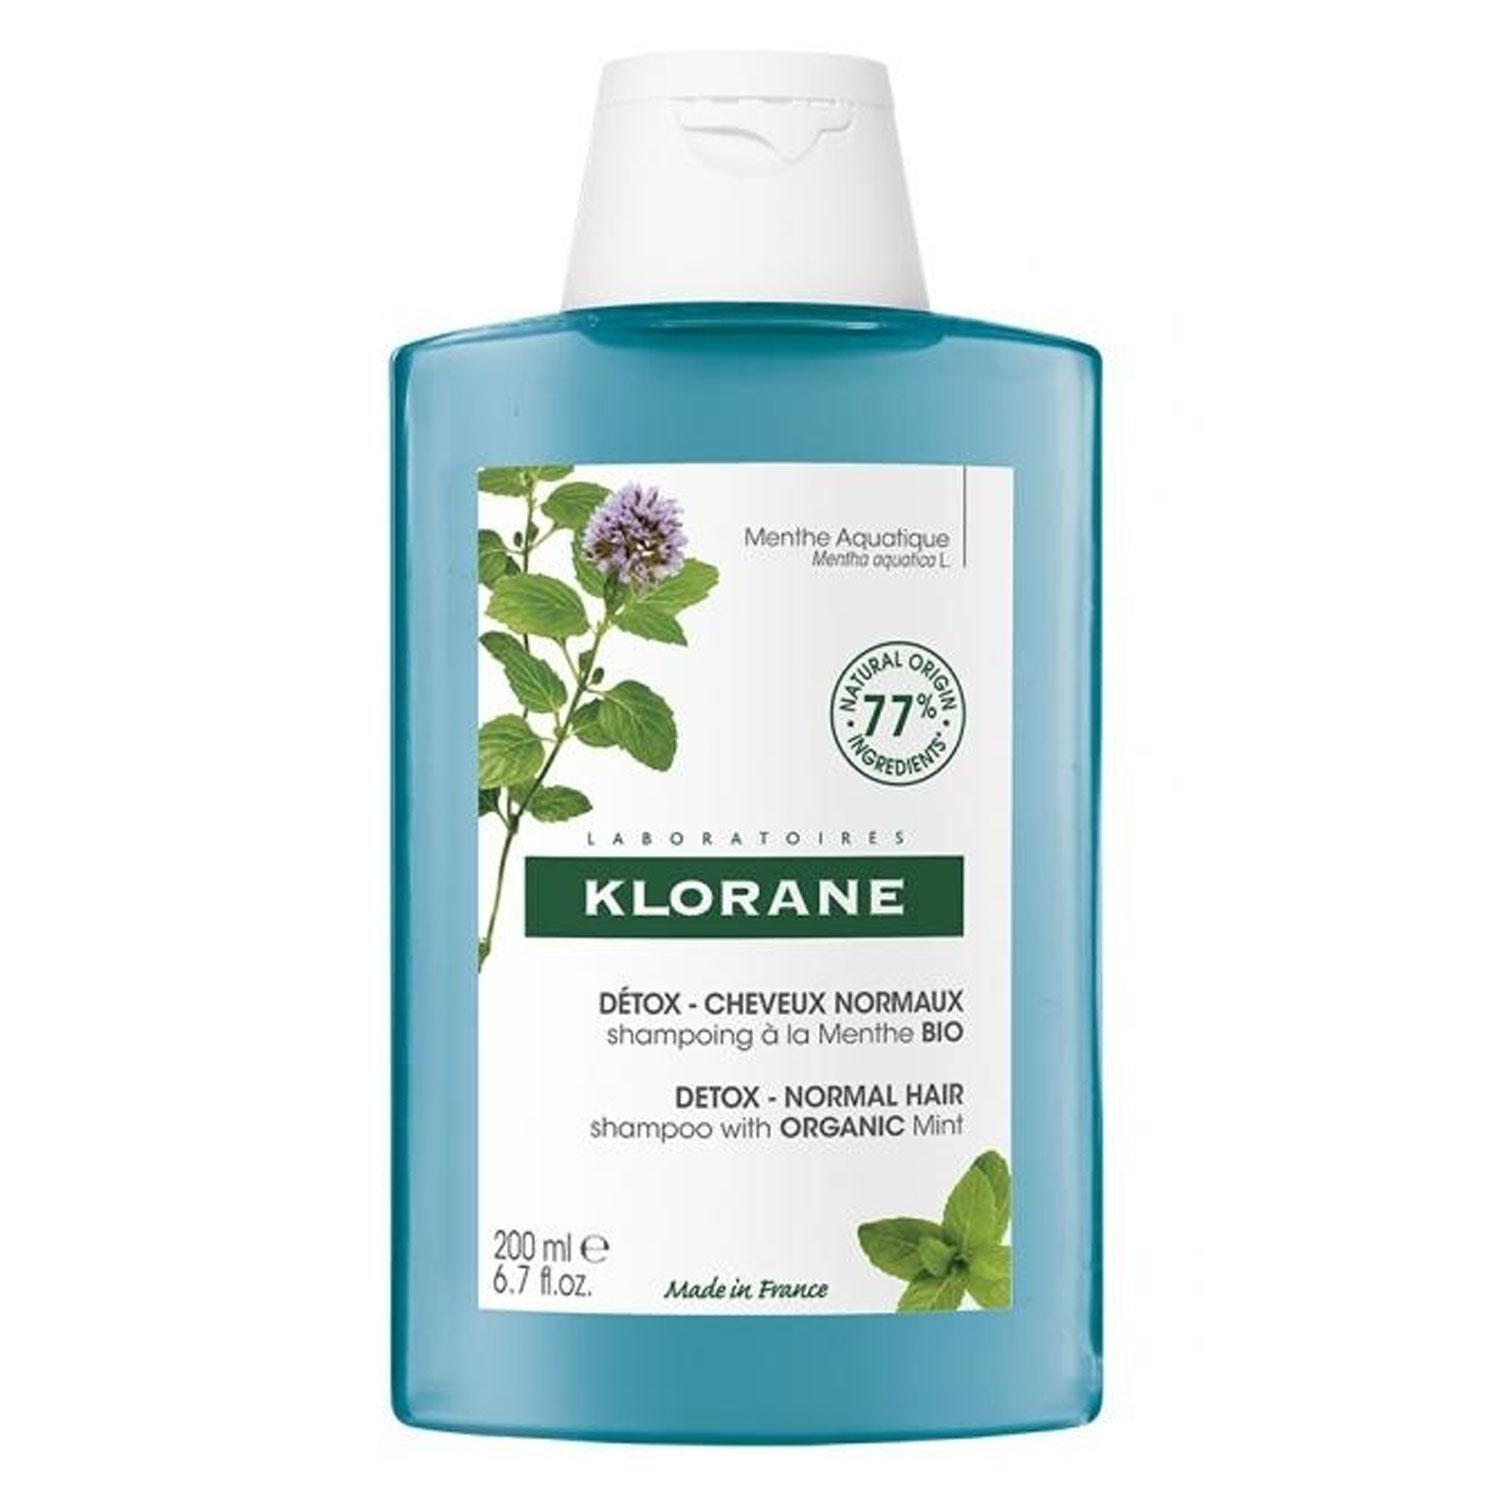 KLORANE Hair - Wasserminze Shampoo